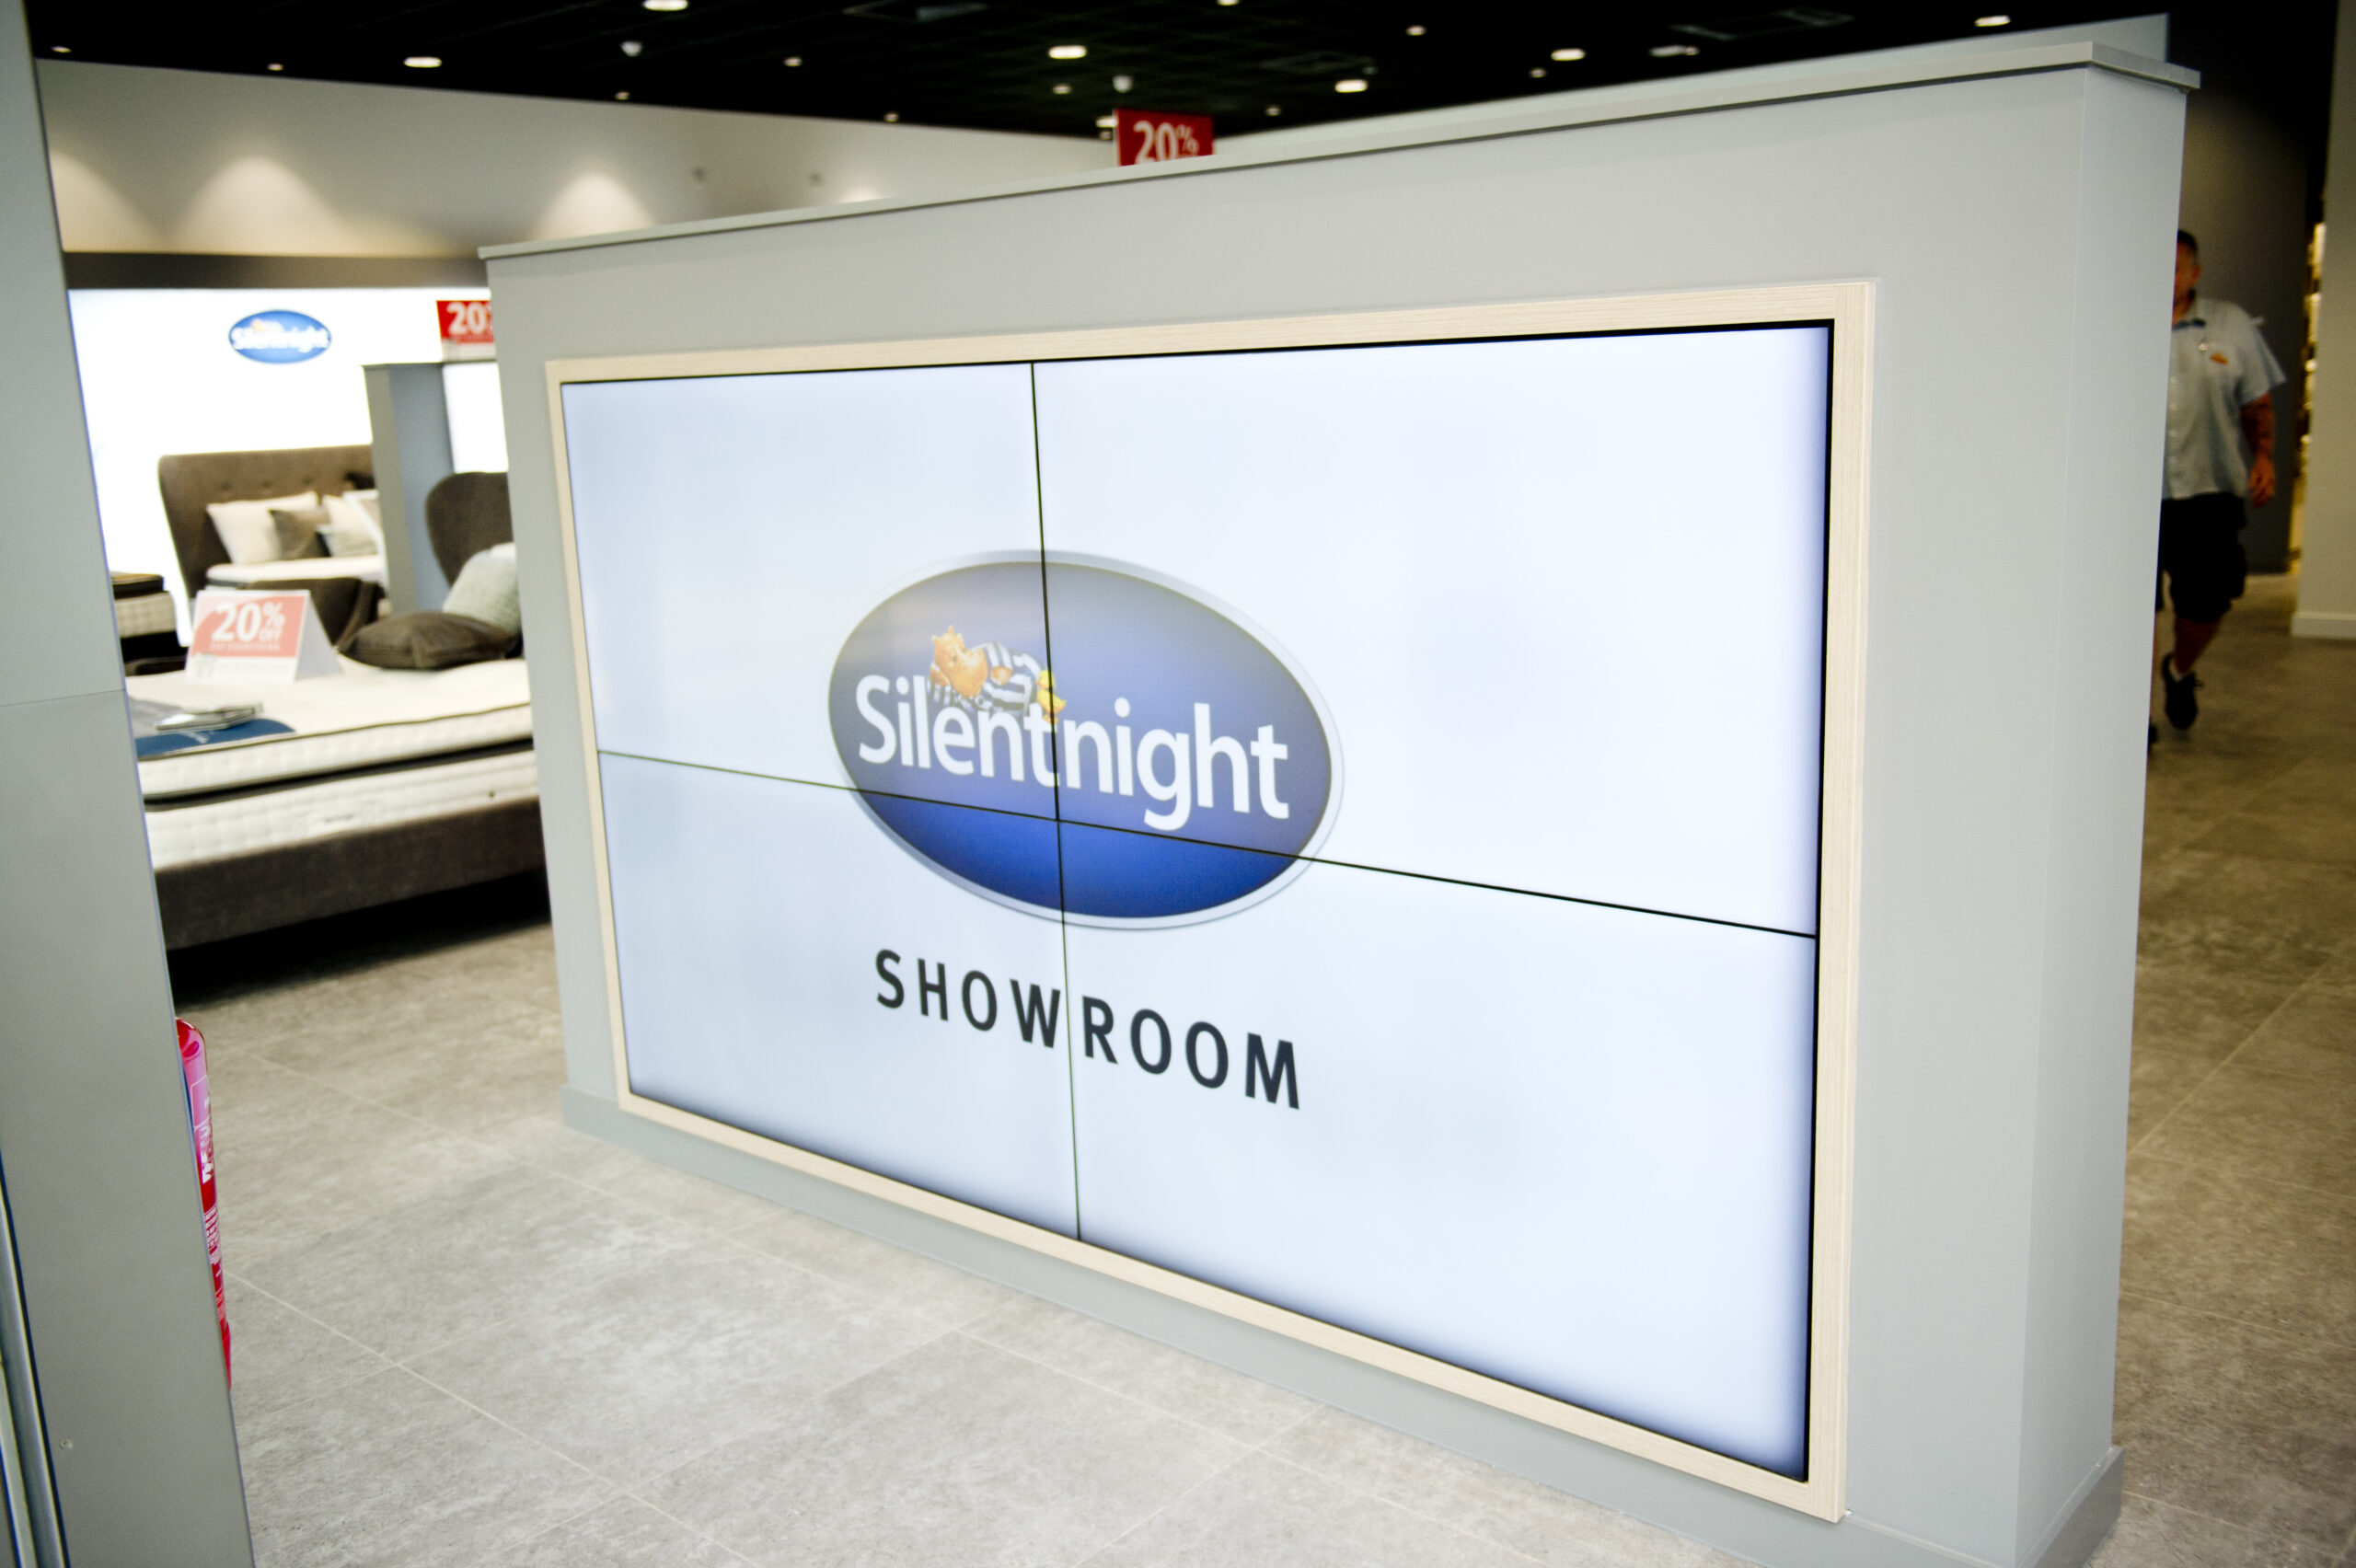 Video wall for silentnight by Universal AV Services